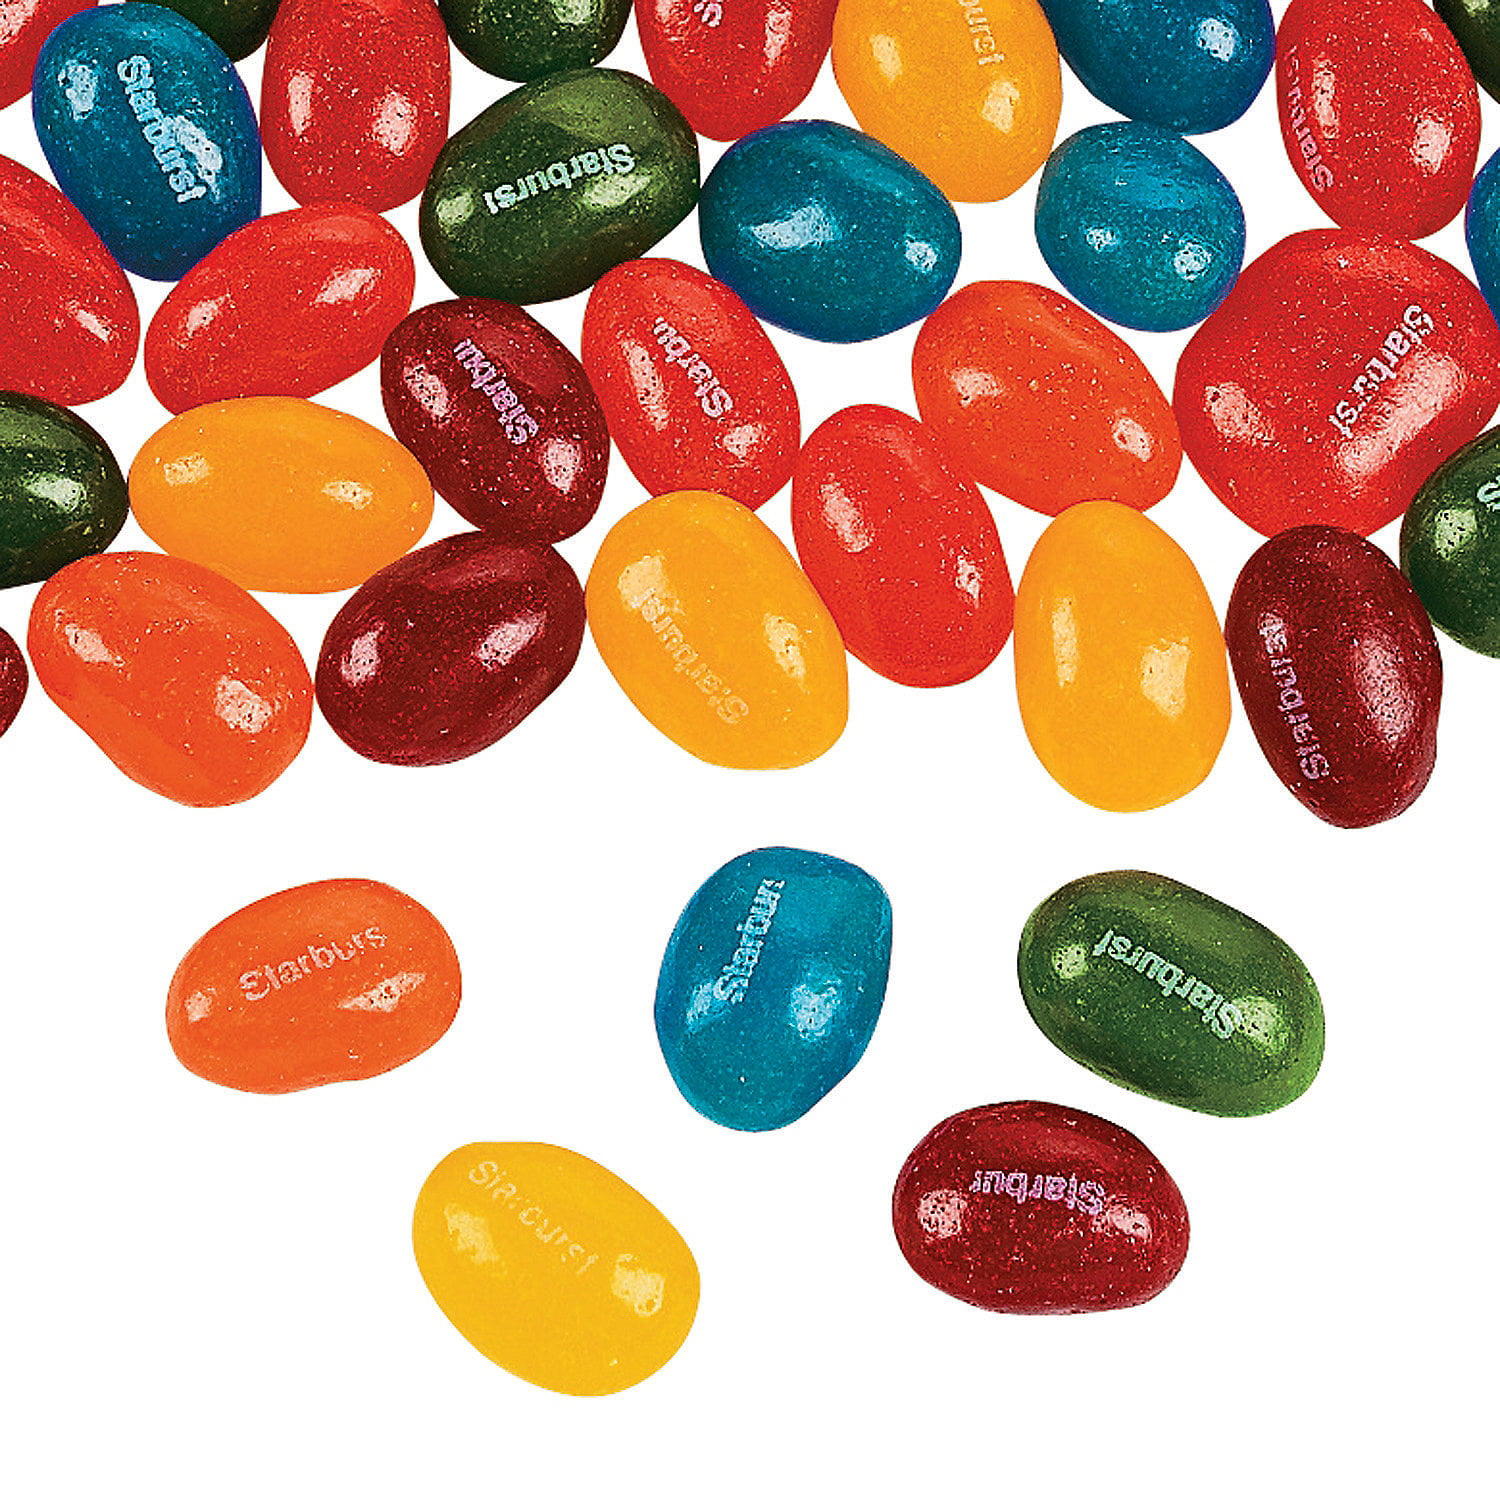 Jellybean brains. Jelly Bean Brains. Jelly картинка для детей на английском.